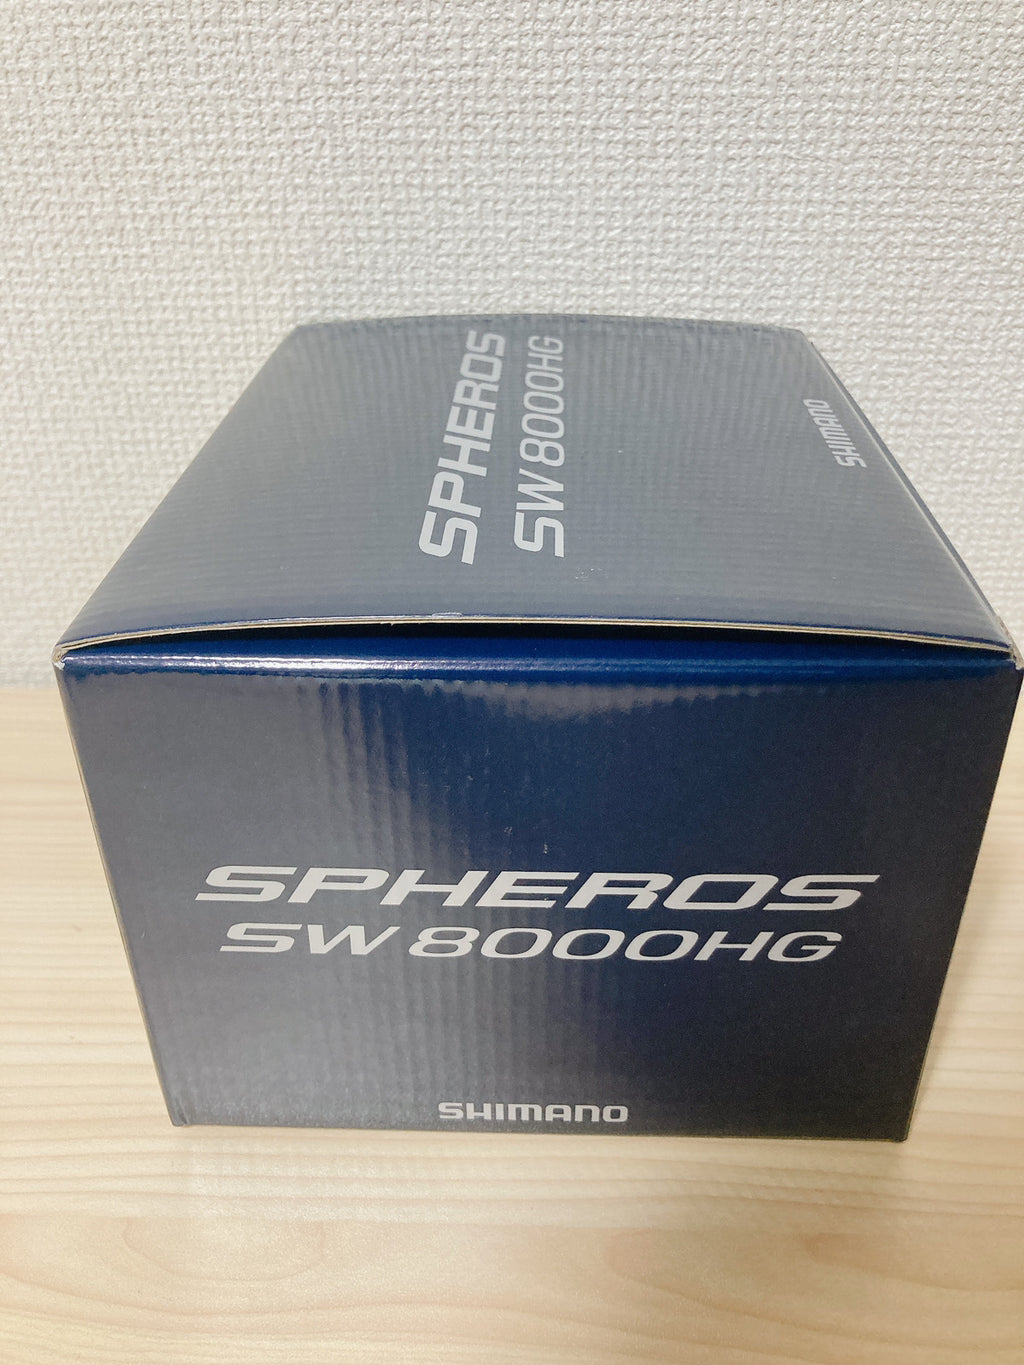 Shimano Spinning Reel 21 SPHEROS SW 8000HG Gear Ratio 5.6:1 Fishing Re